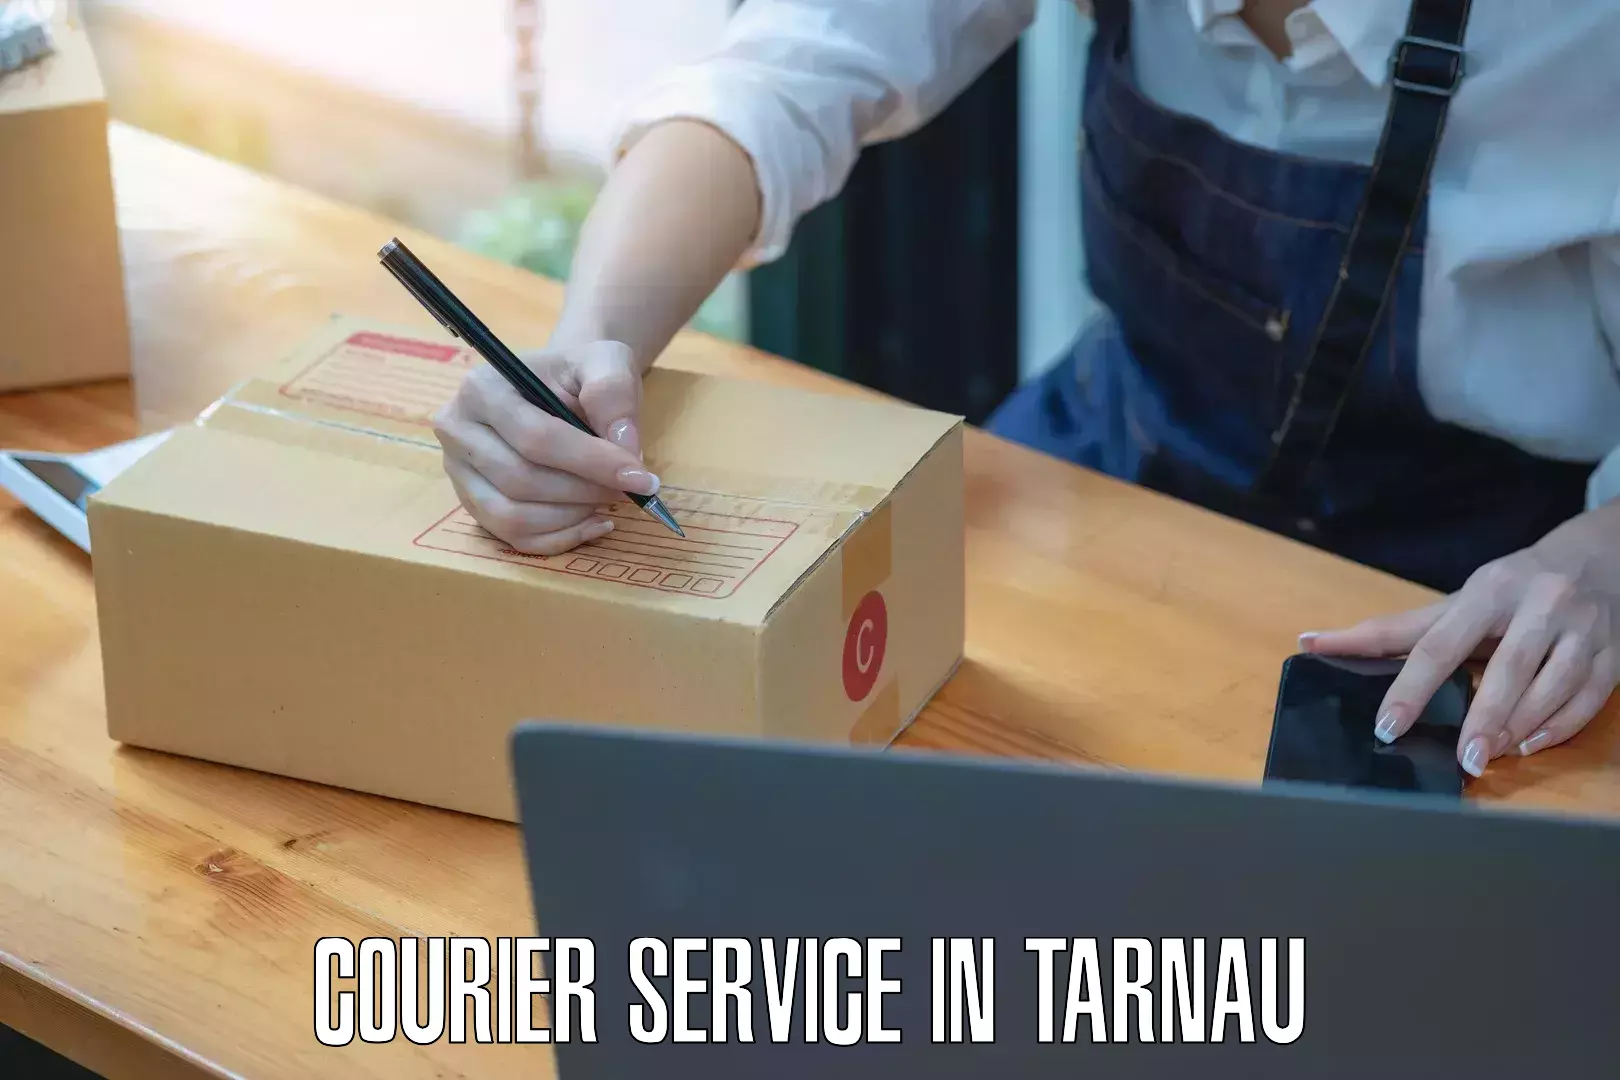 Lightweight parcel options in Tarnau